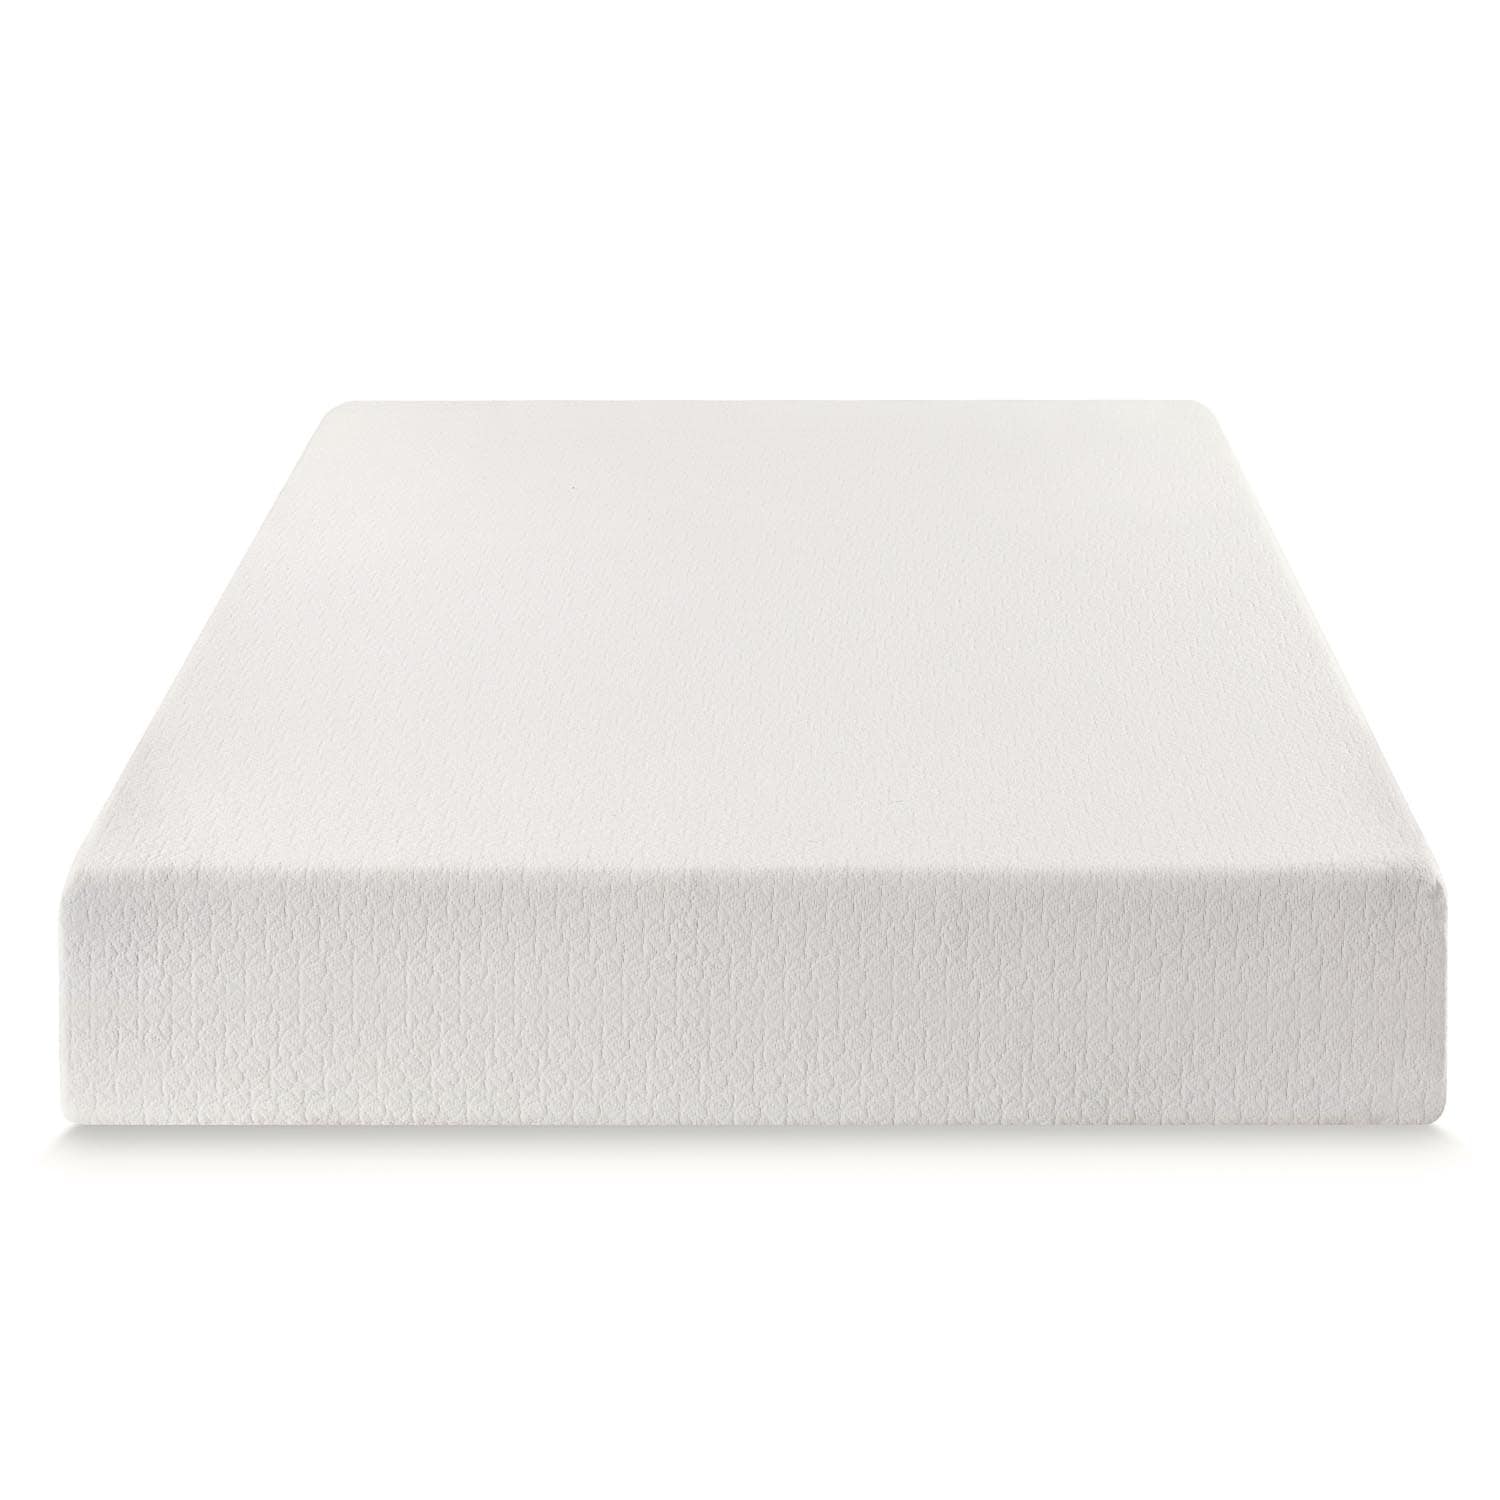 12 Inch Memory Foam Mattress By Crown Comfort - On Sale - Bed Bath & Beyond  - 11601320